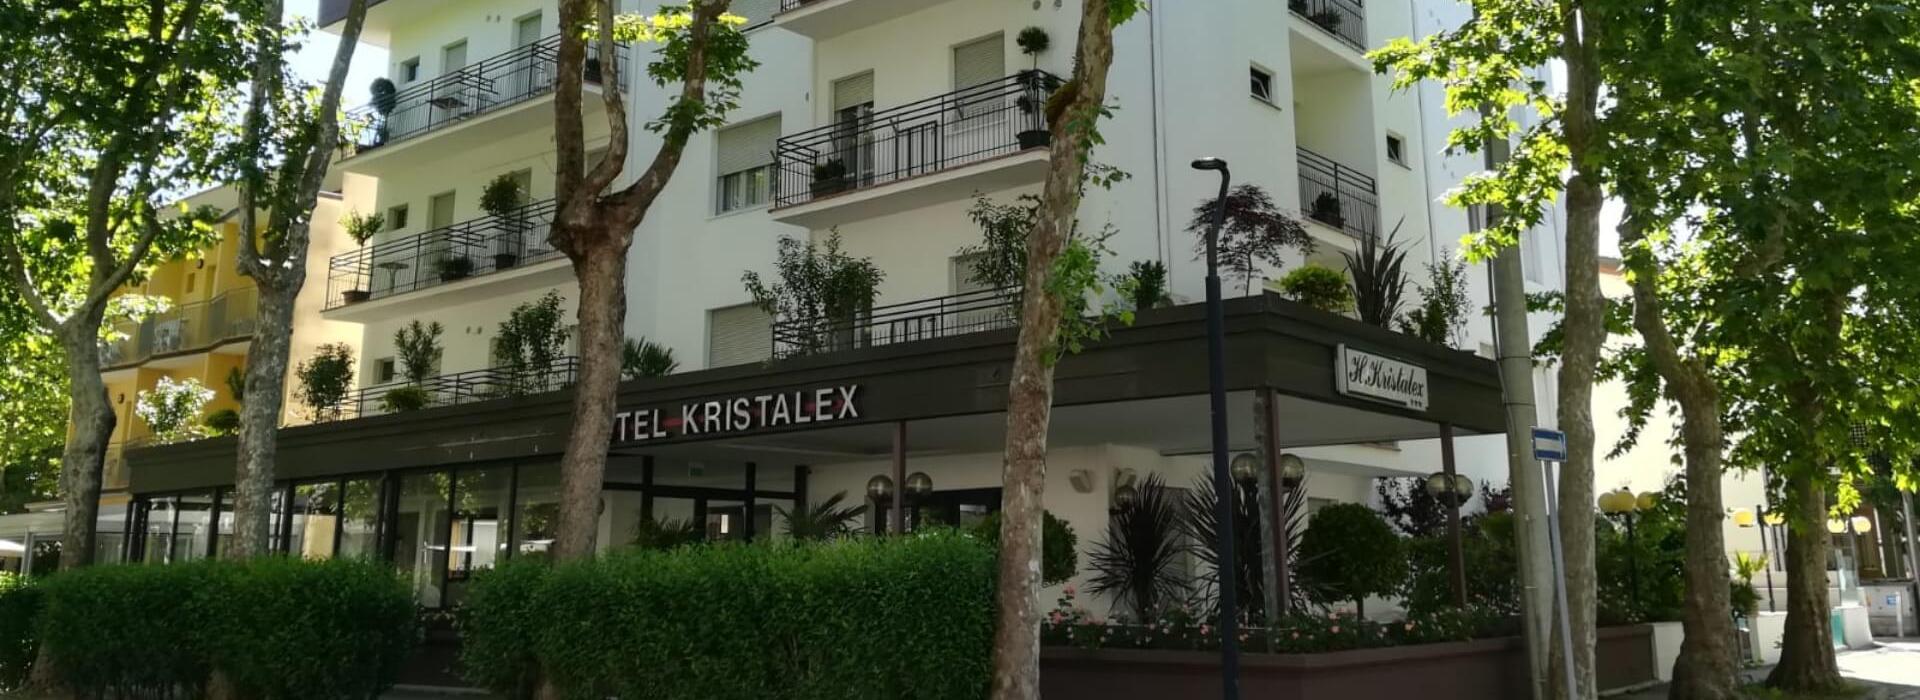 hotelkristalex it offerta-con-beach-box-gratis-in-hotel-pet-friendly-a-cesenatico 017